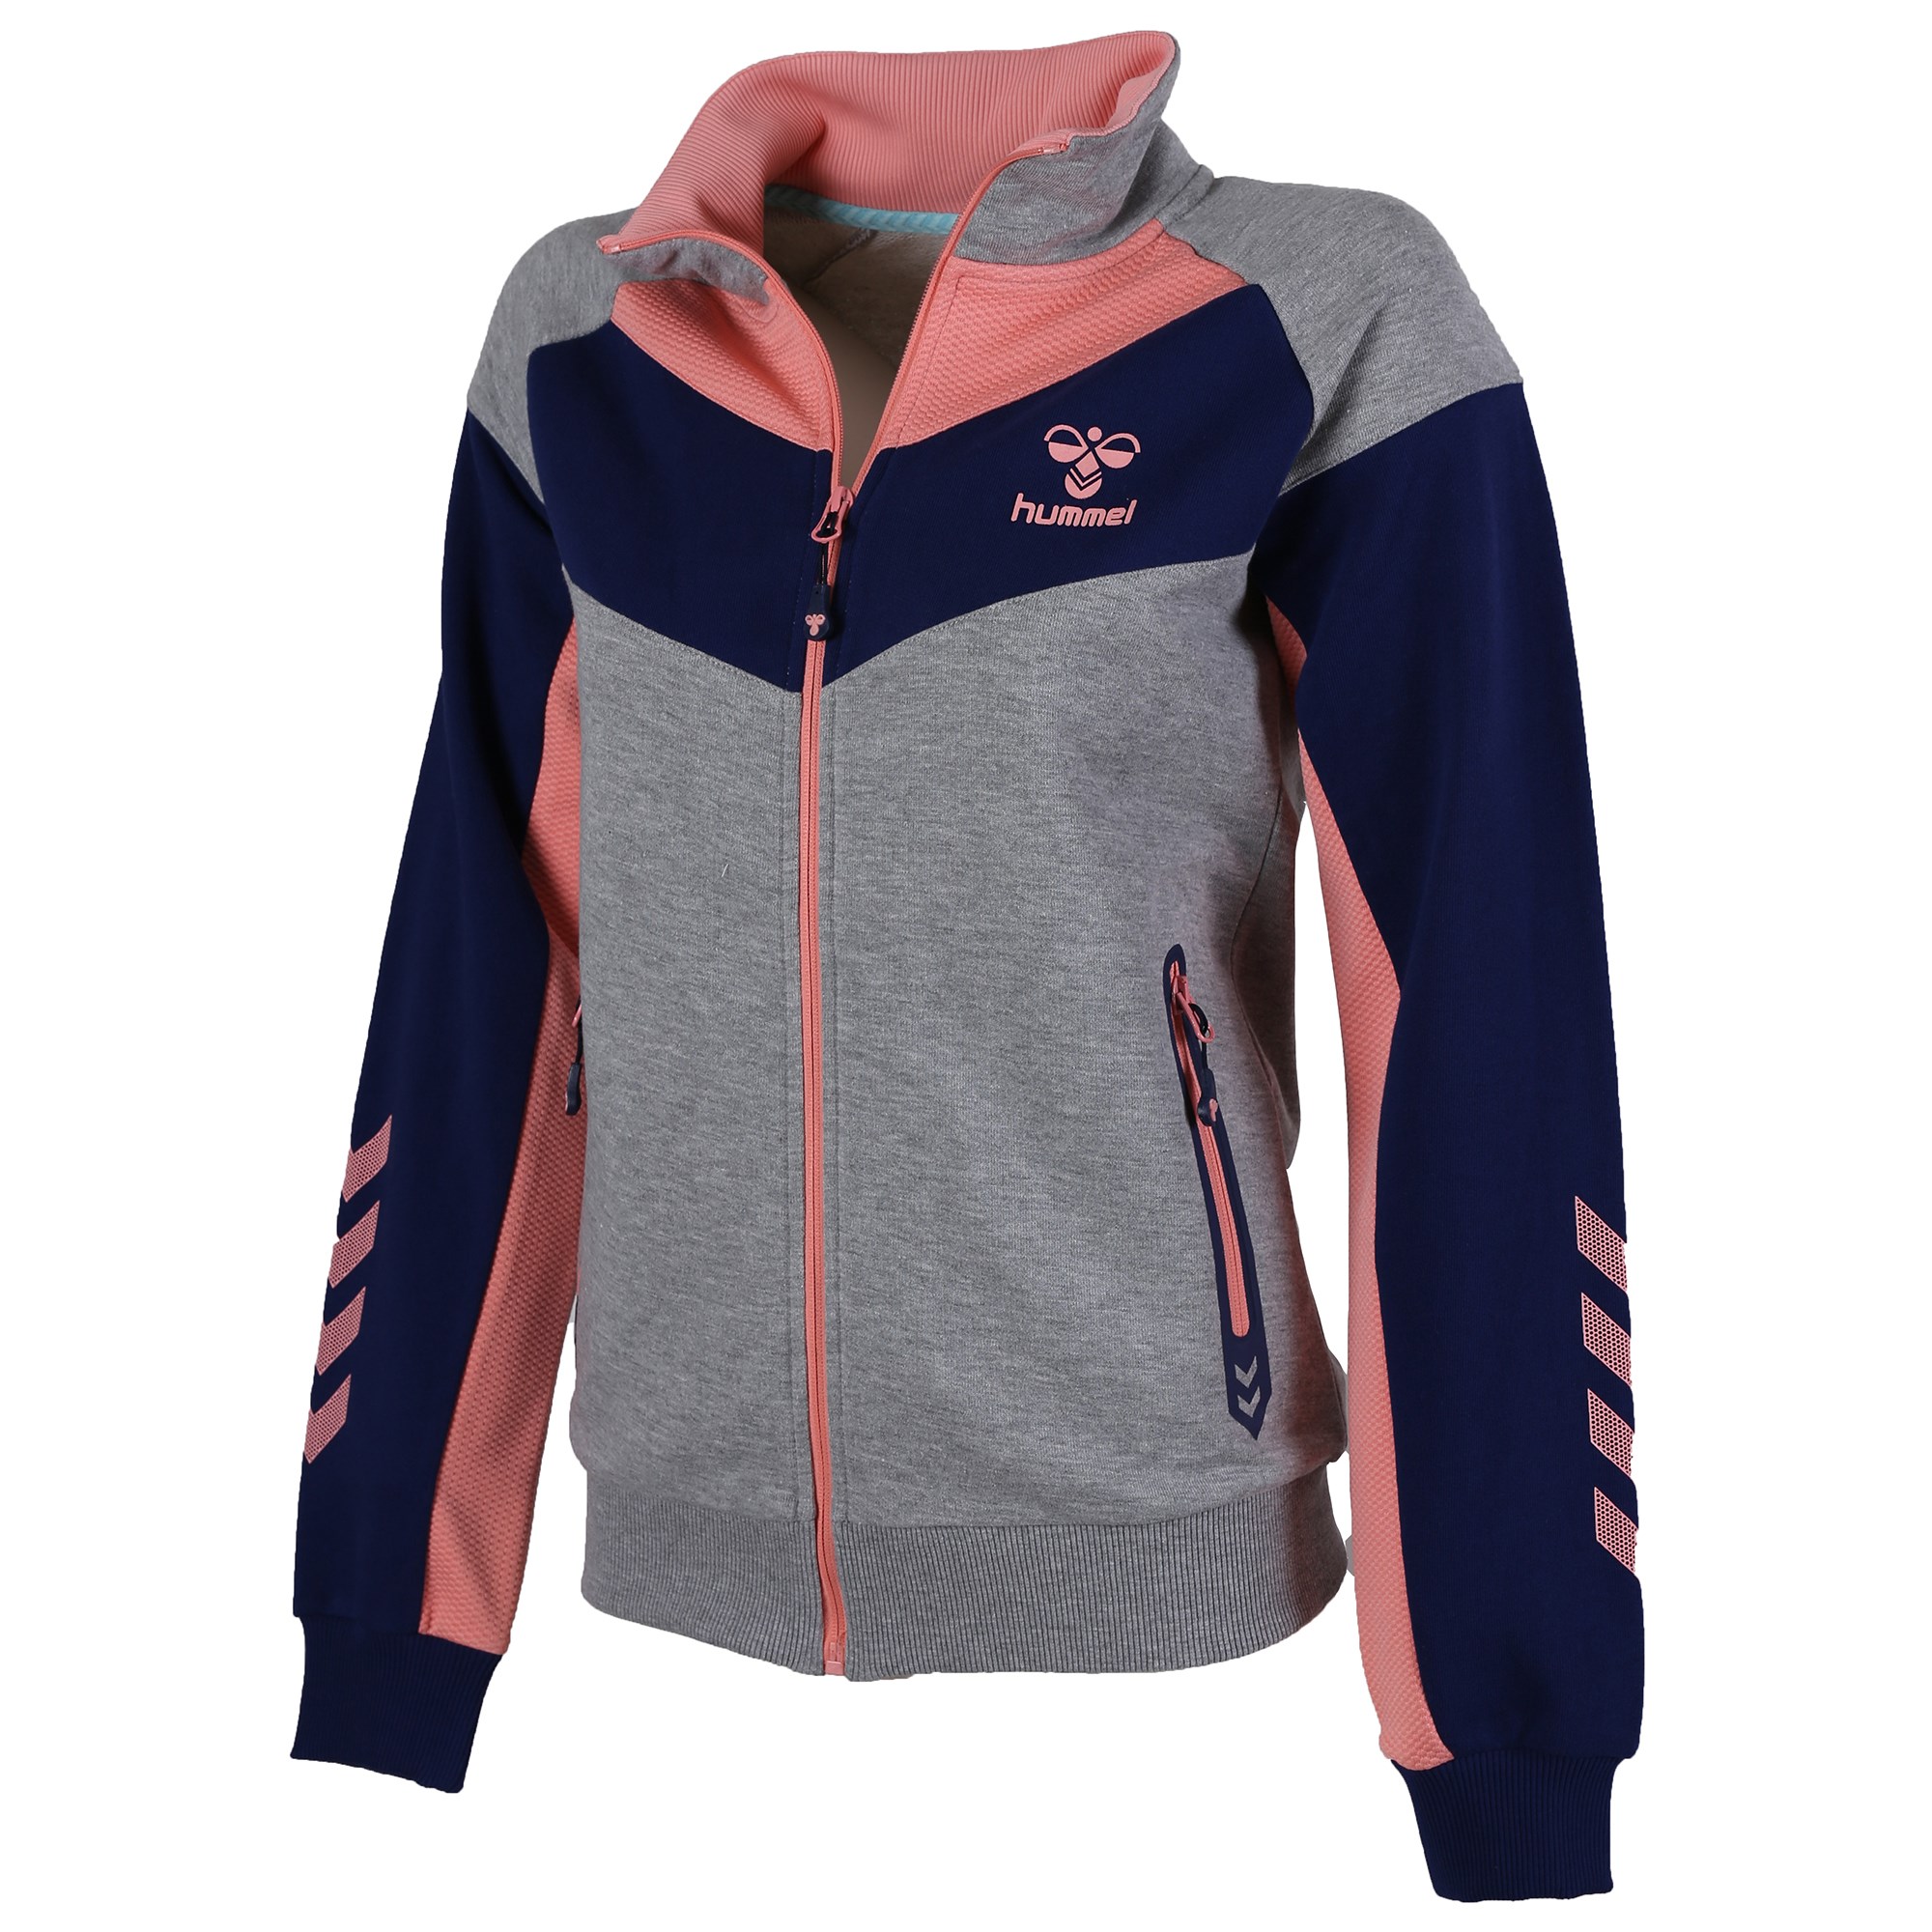 Hummel Patty Zip Jacket Bayan Sweatshirt Ürün kodu: T37238-S04 | Etichet  Sport